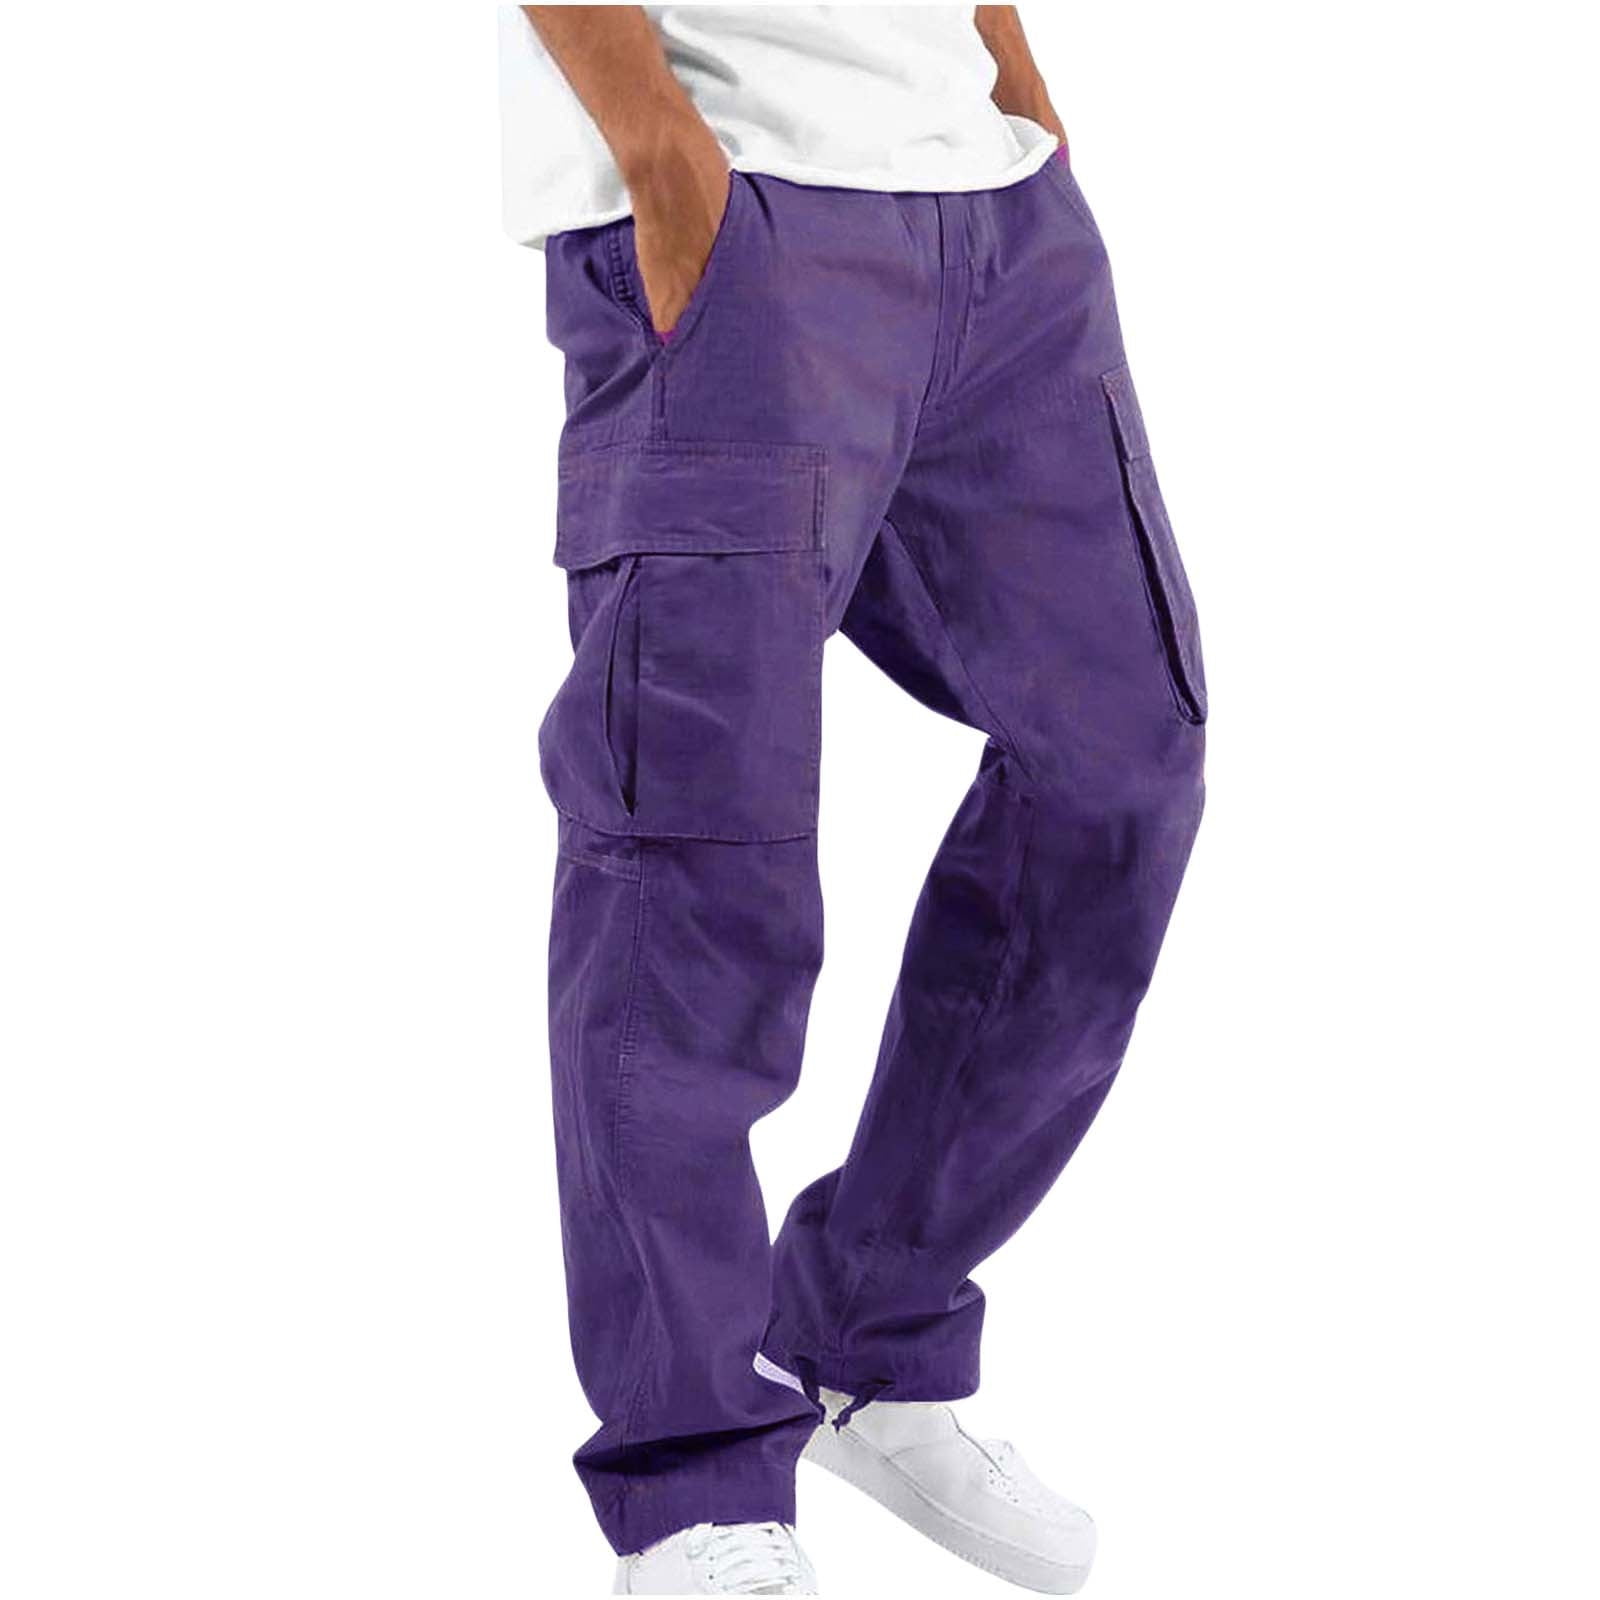 ❄Cargo pants Jogger pants 6 pocket pants for unisex